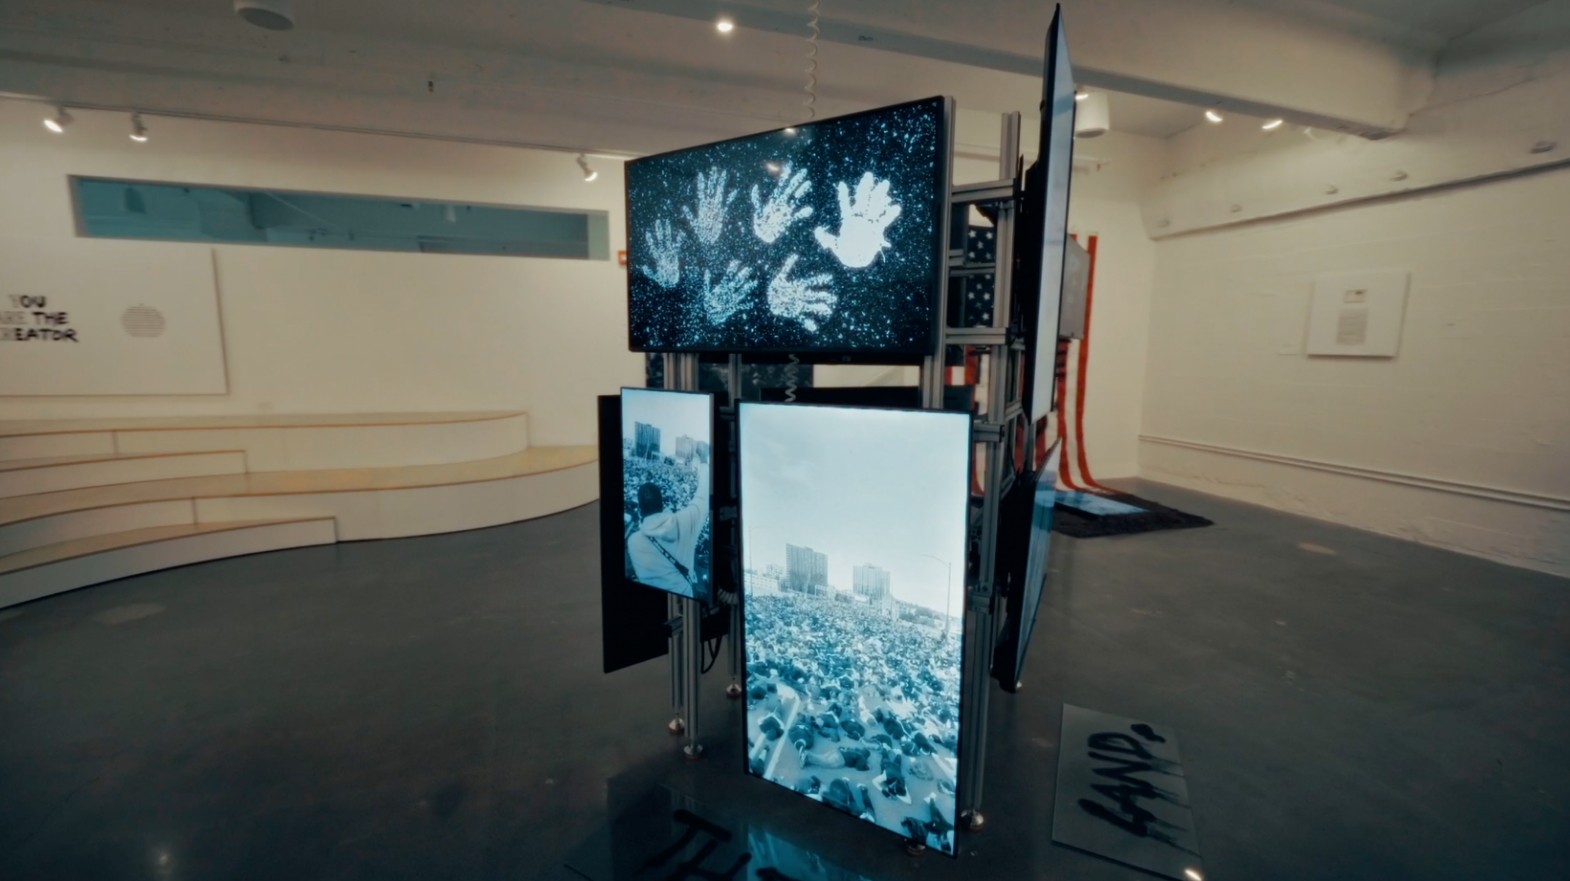 Video screens on video installation show Josue's work